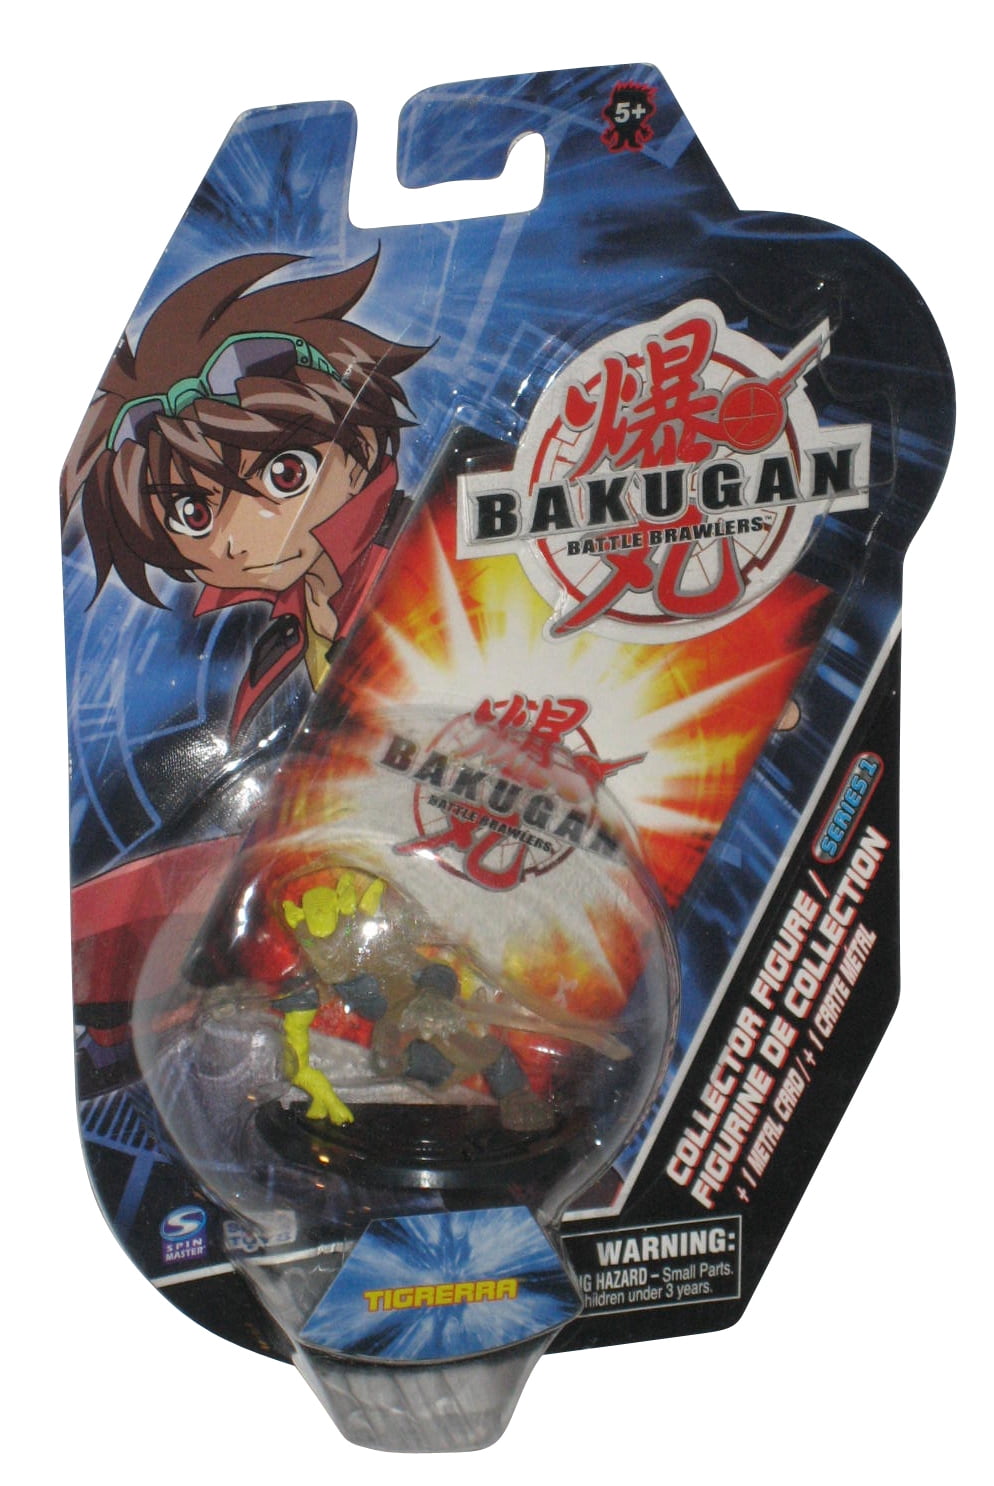 Bakugan Battle Brawlers Tigrerra Clear Series 1 Spin Master Toy Figure Walmart.com